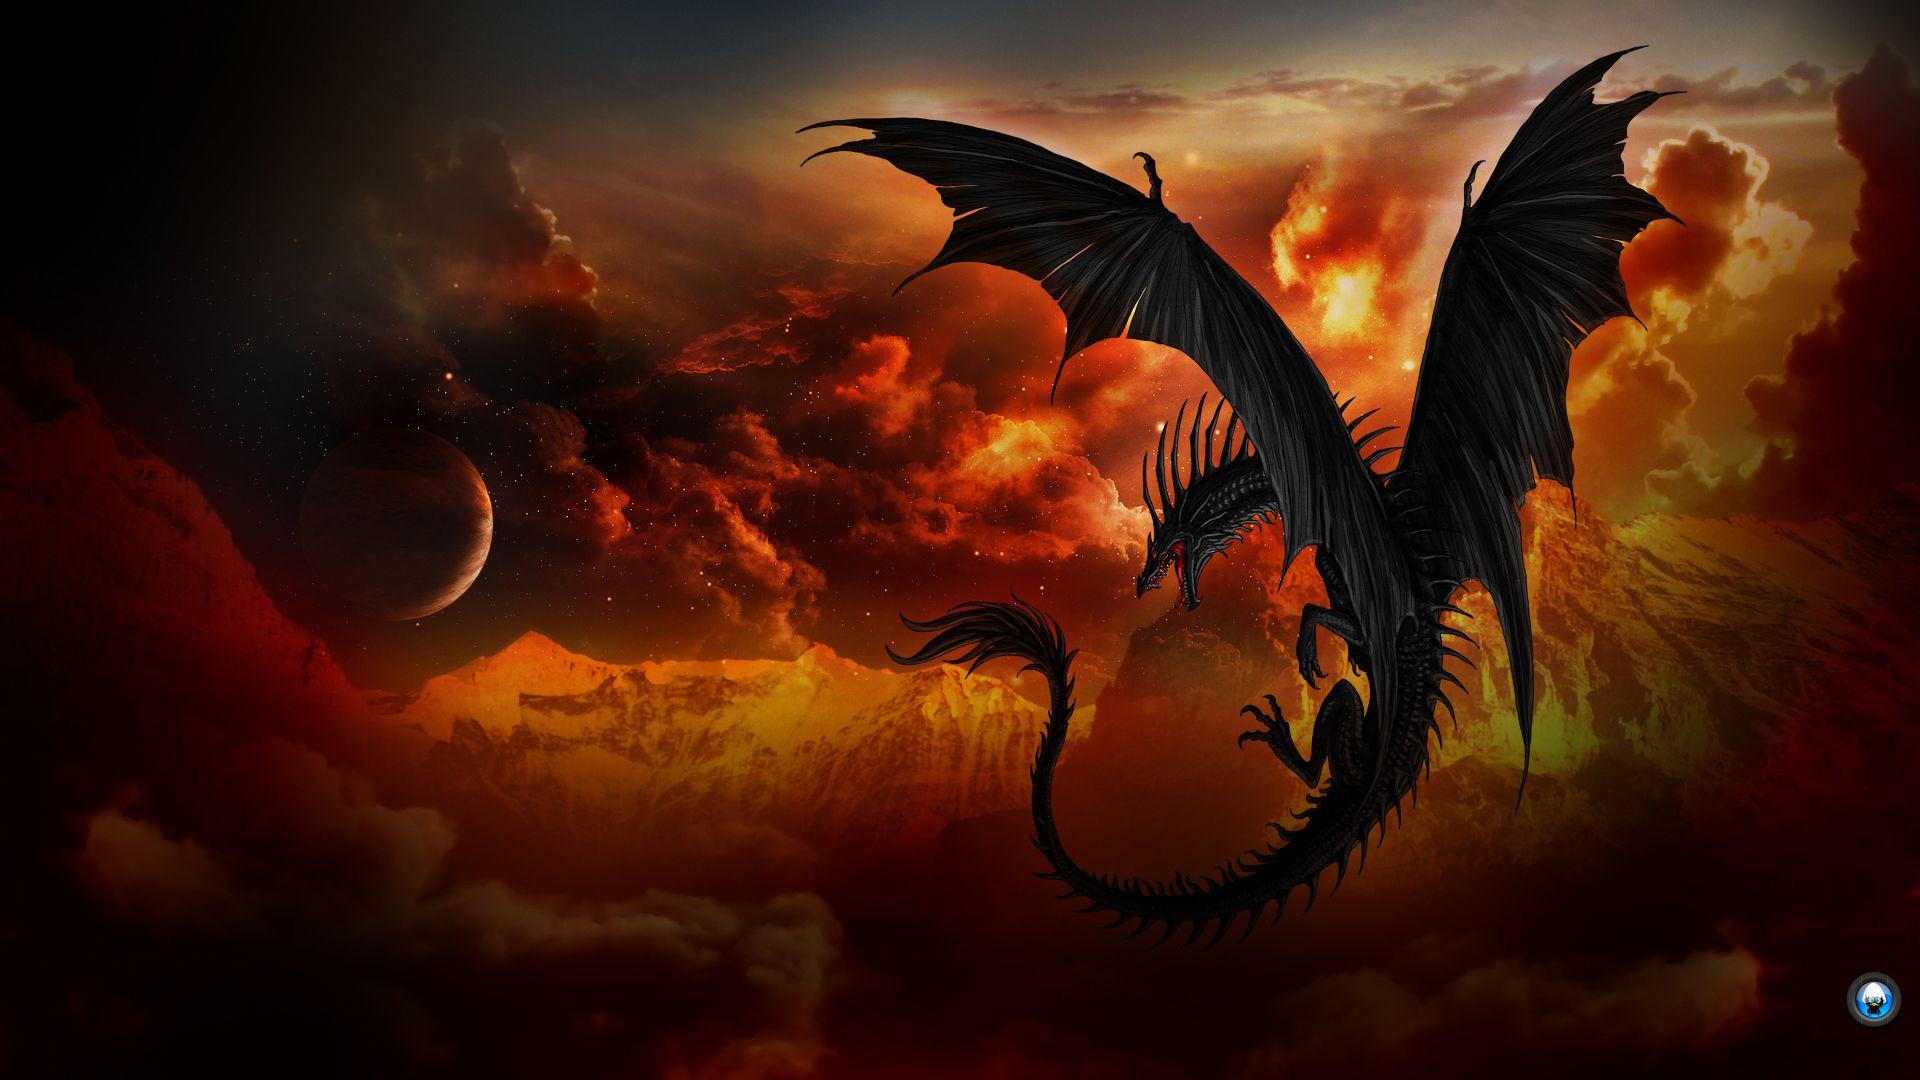 Fantasy Dragon Wallpaper. Fantasy. Background image